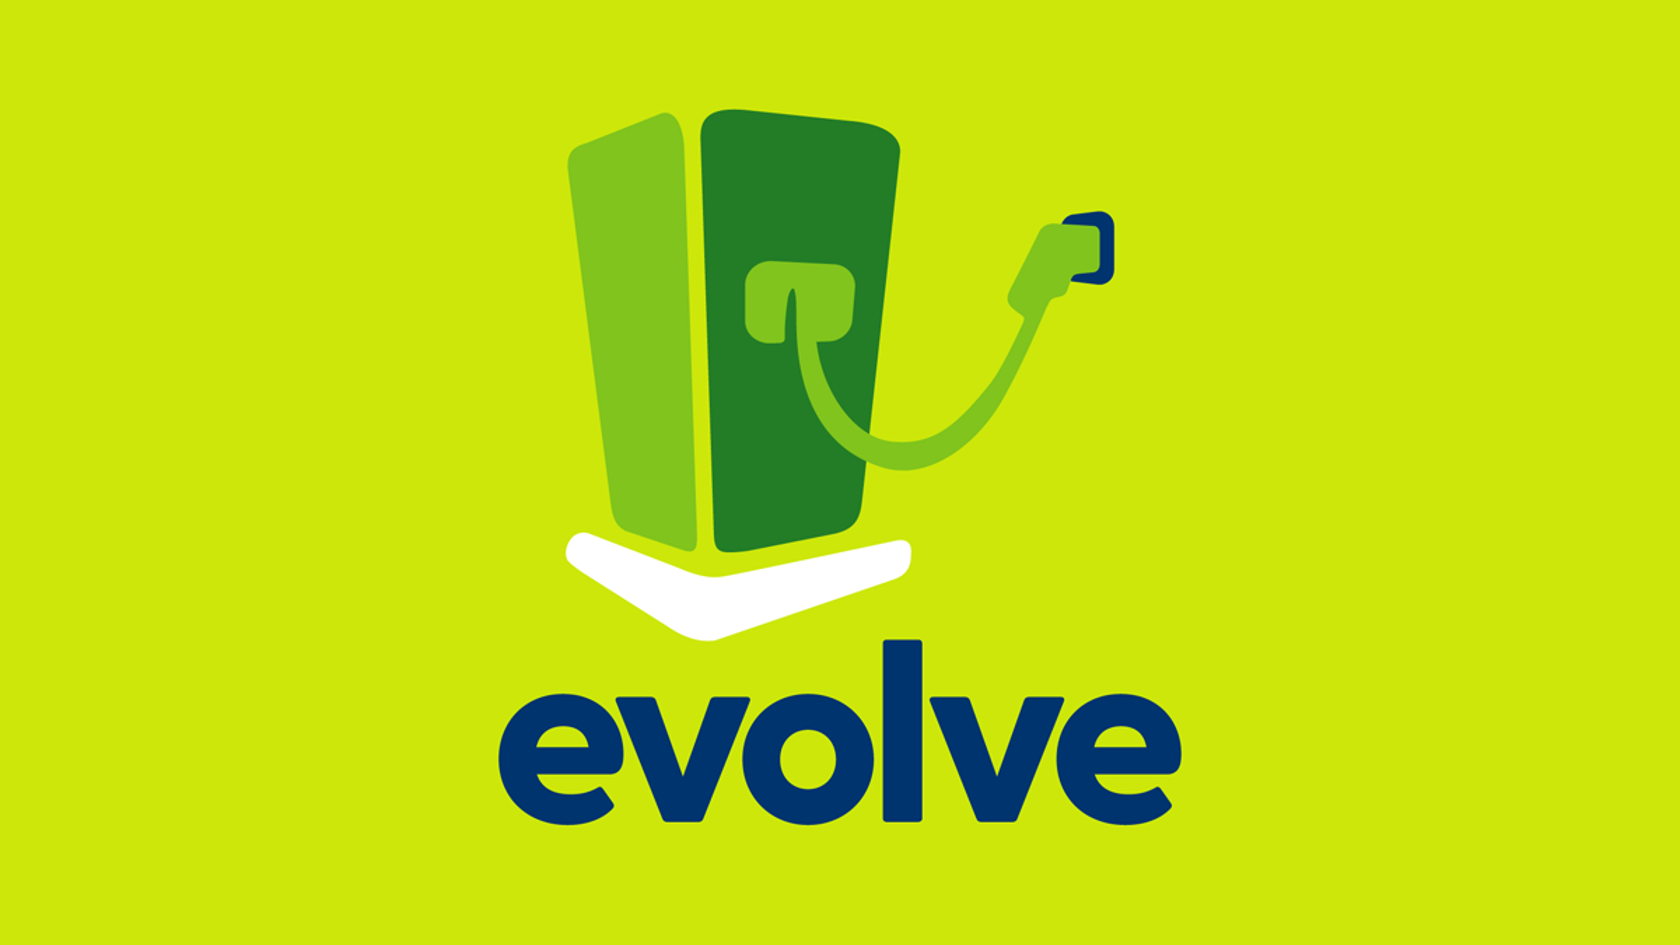 Evolve logo and icon